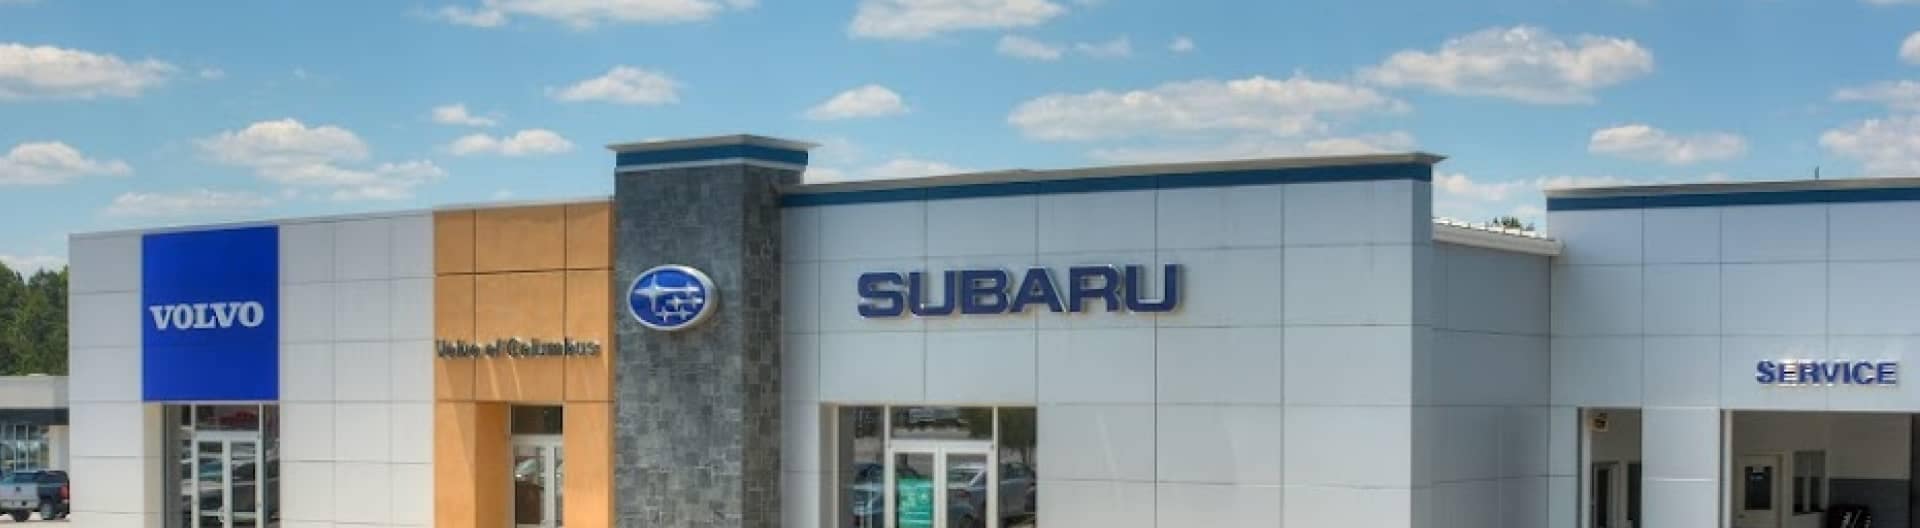 Rivertown Subaru Dealership Exterior